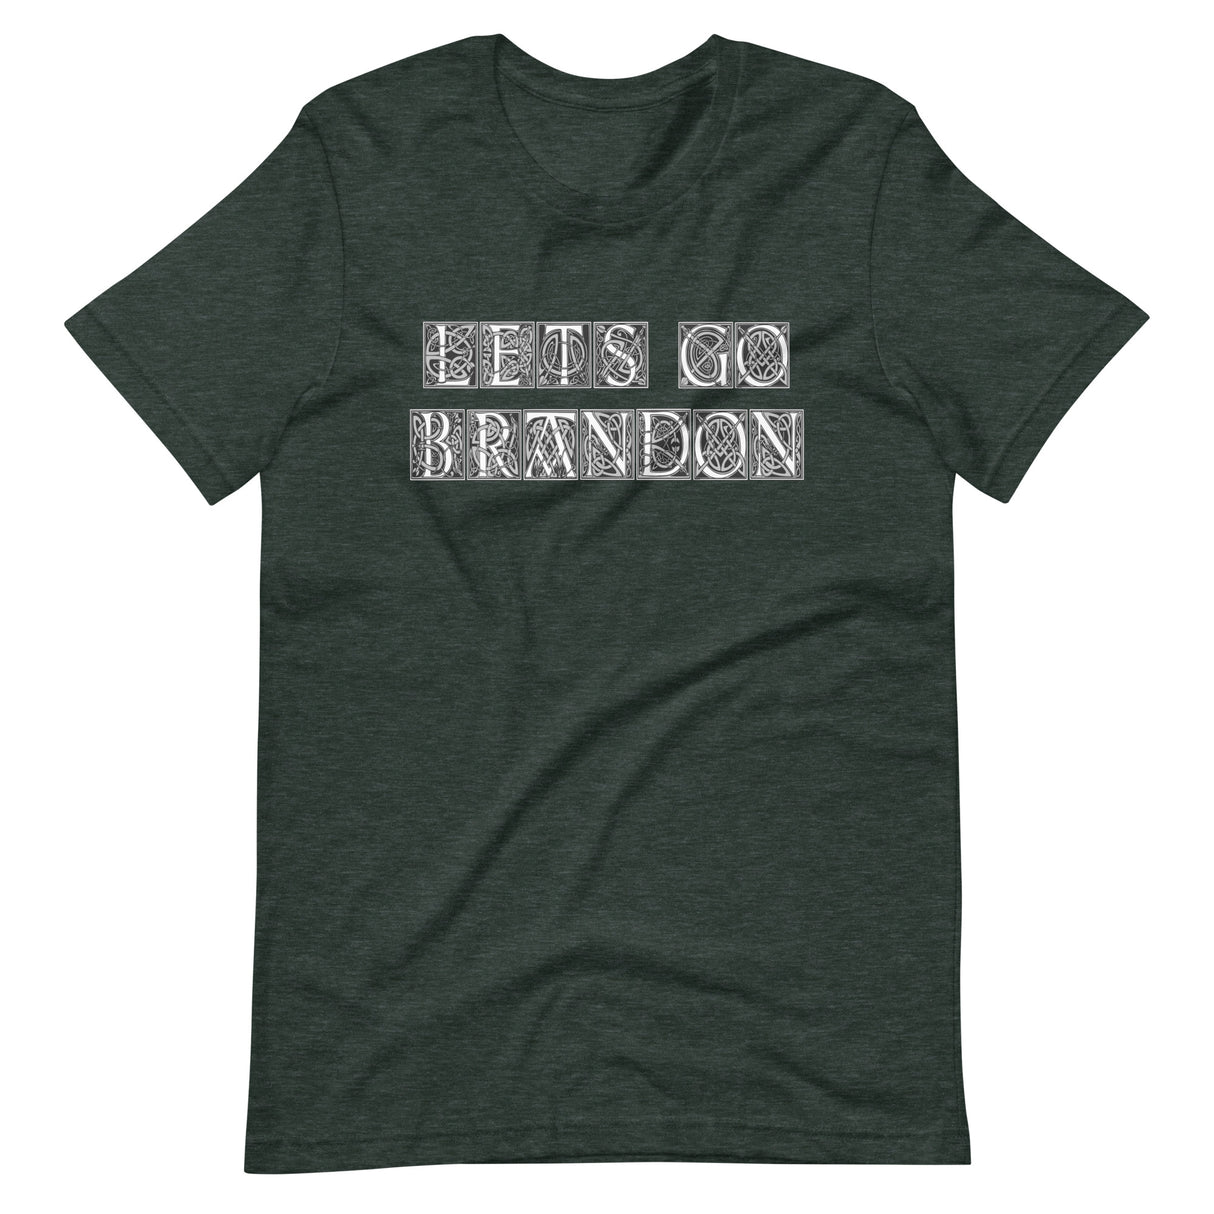 Let's Go Brandon Celtic Shirt - Libertarian Country